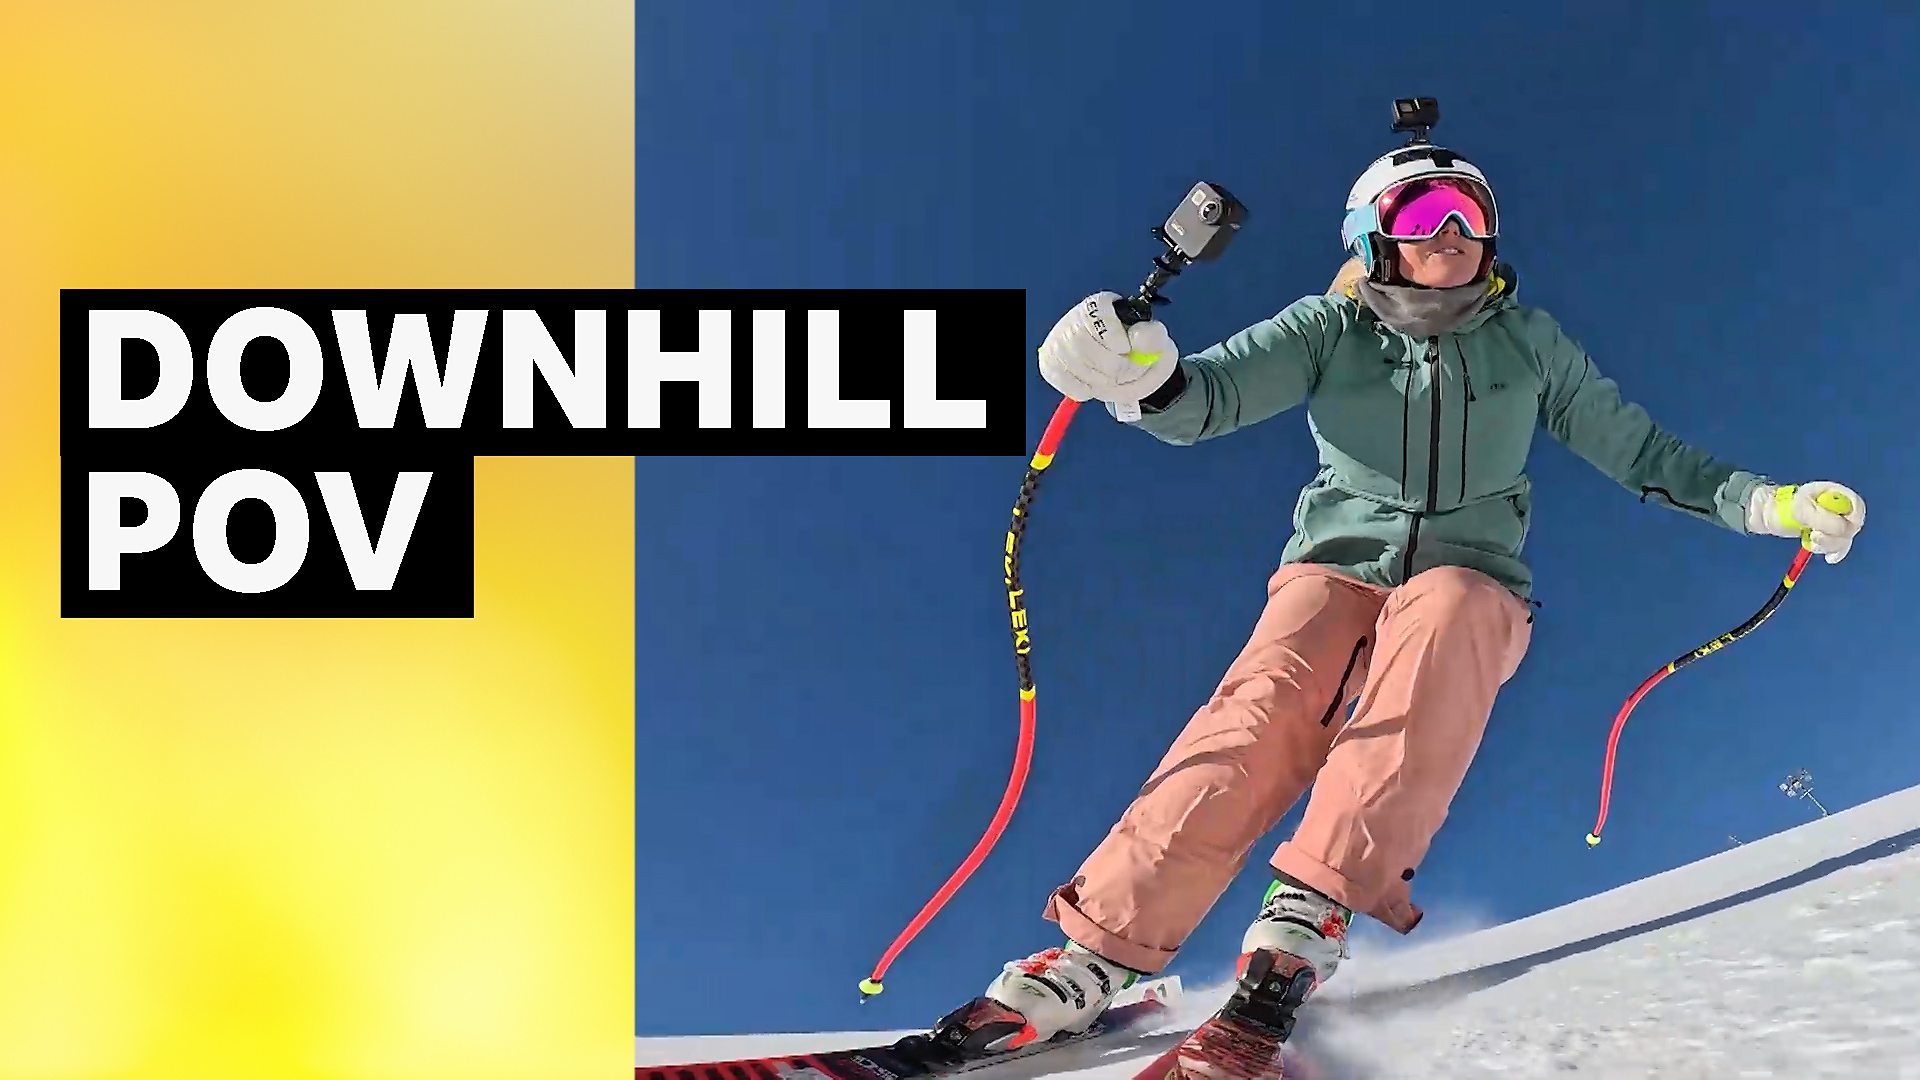 Ski Sunday: Ride the Alpine downhill course with Chemmy Alcott - BBC Sport